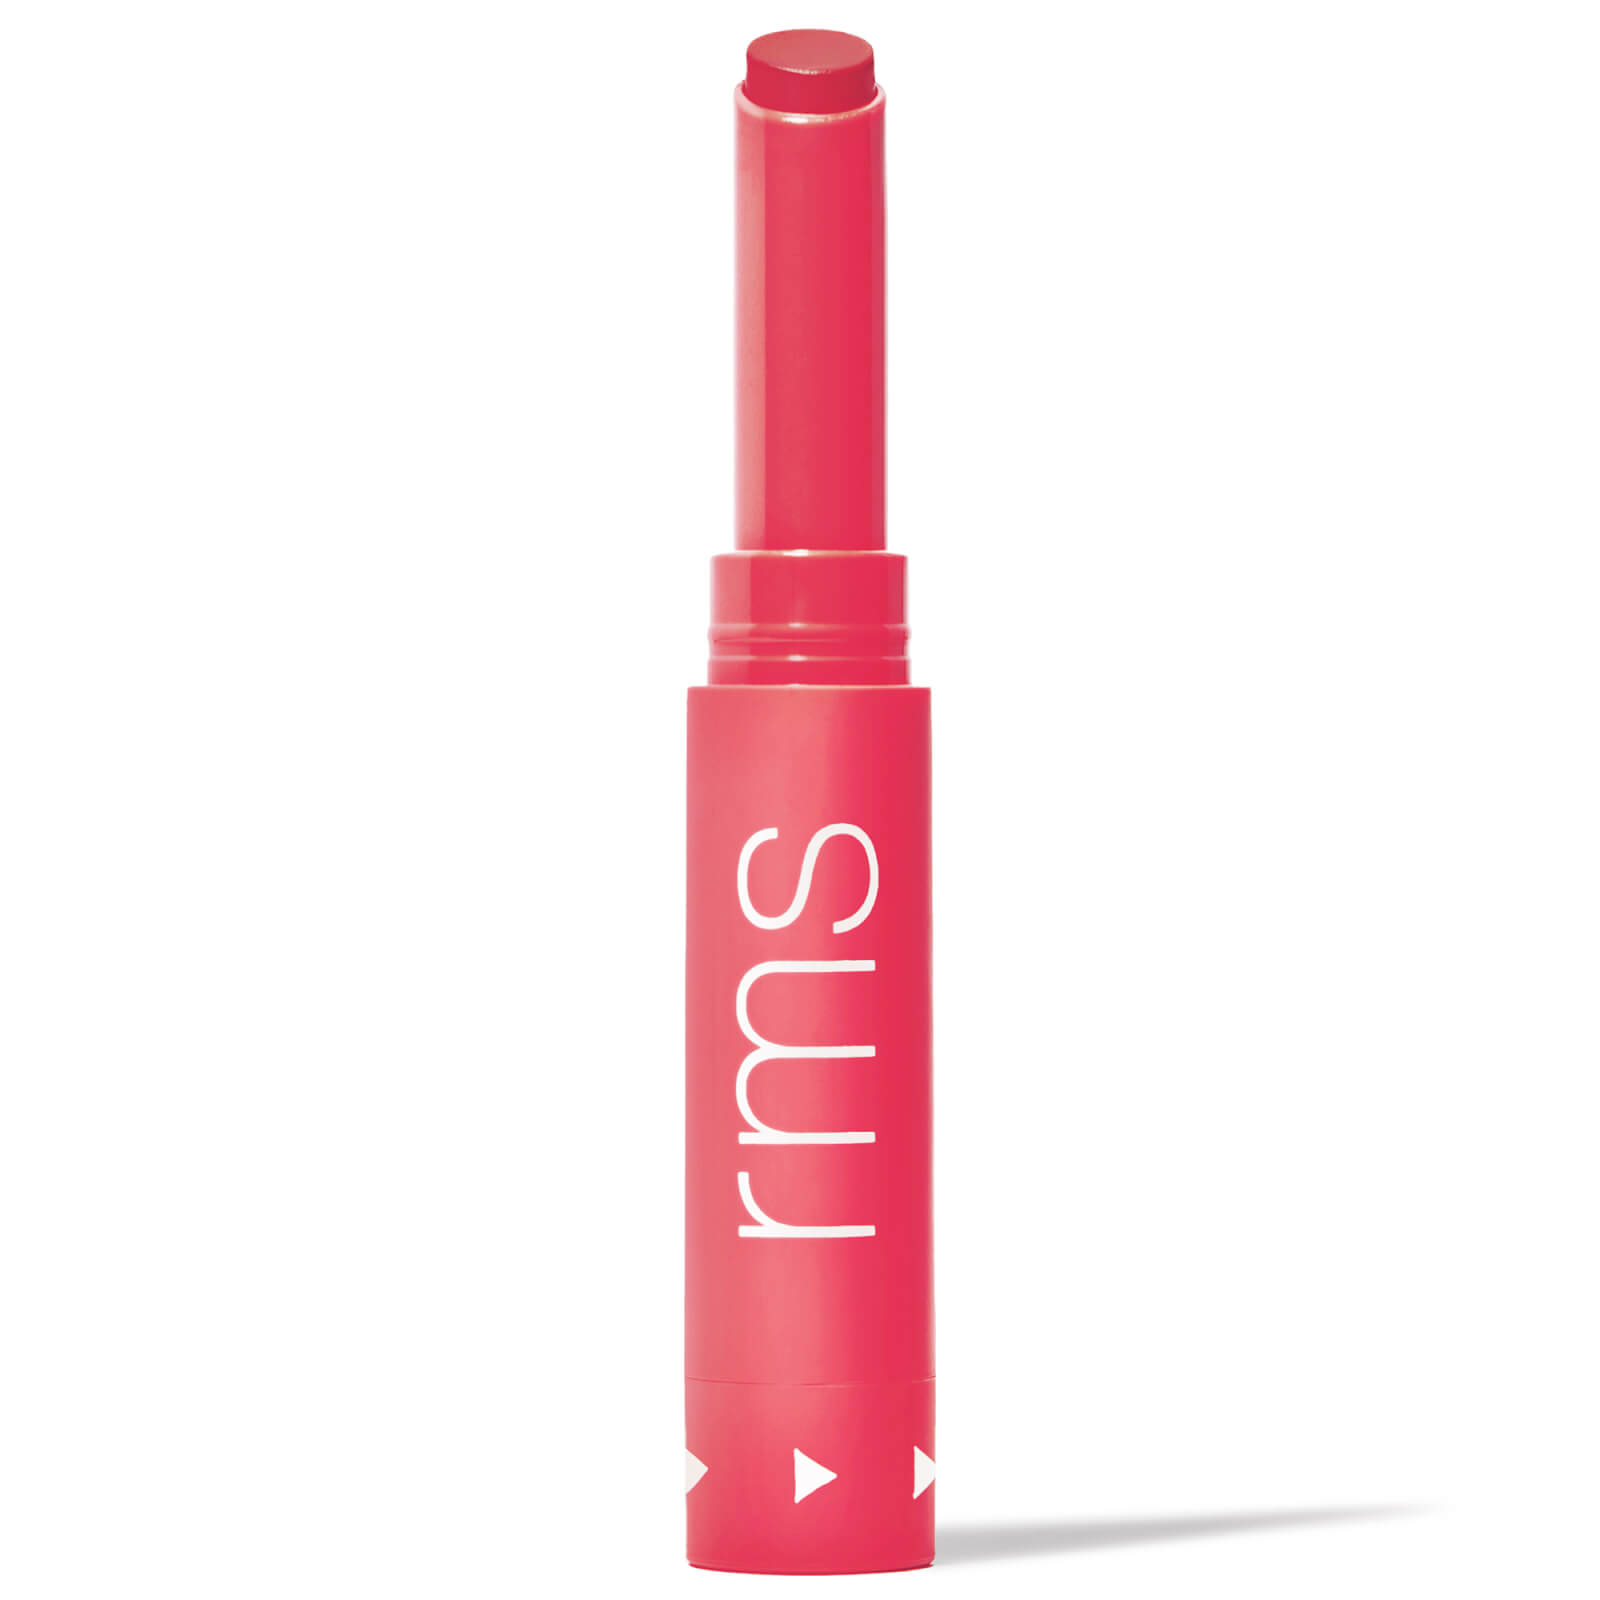 Rms Beauty Legendary Serum Lipstick 17g (various Shades) - Linda In Ruby Moon